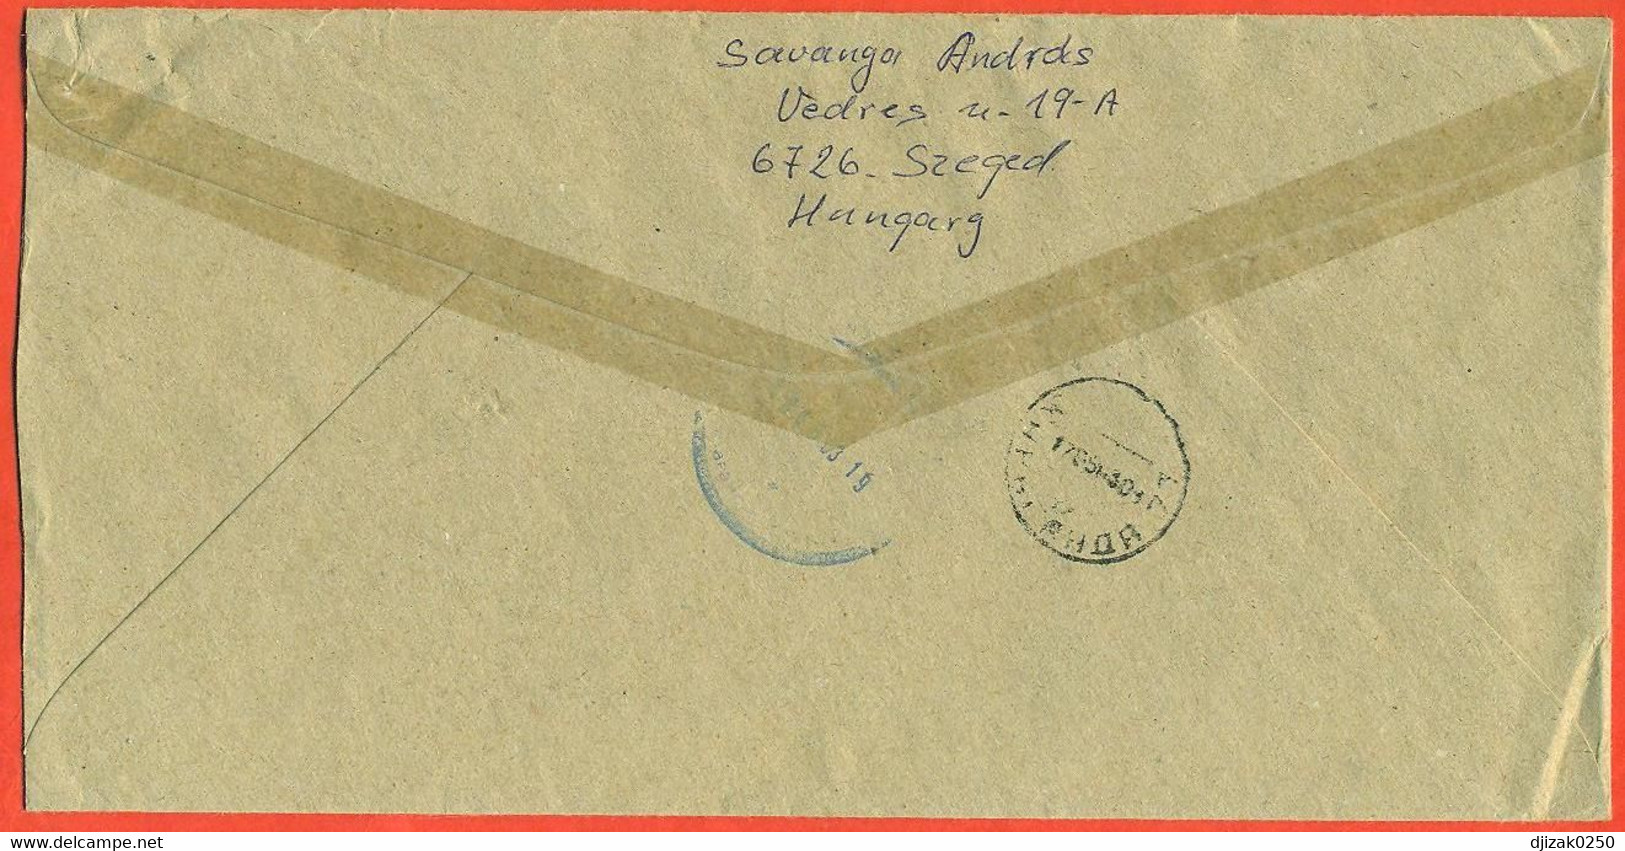 Hungary 2003. Registerted Envelope Passed Through The Mail. - Cartas & Documentos